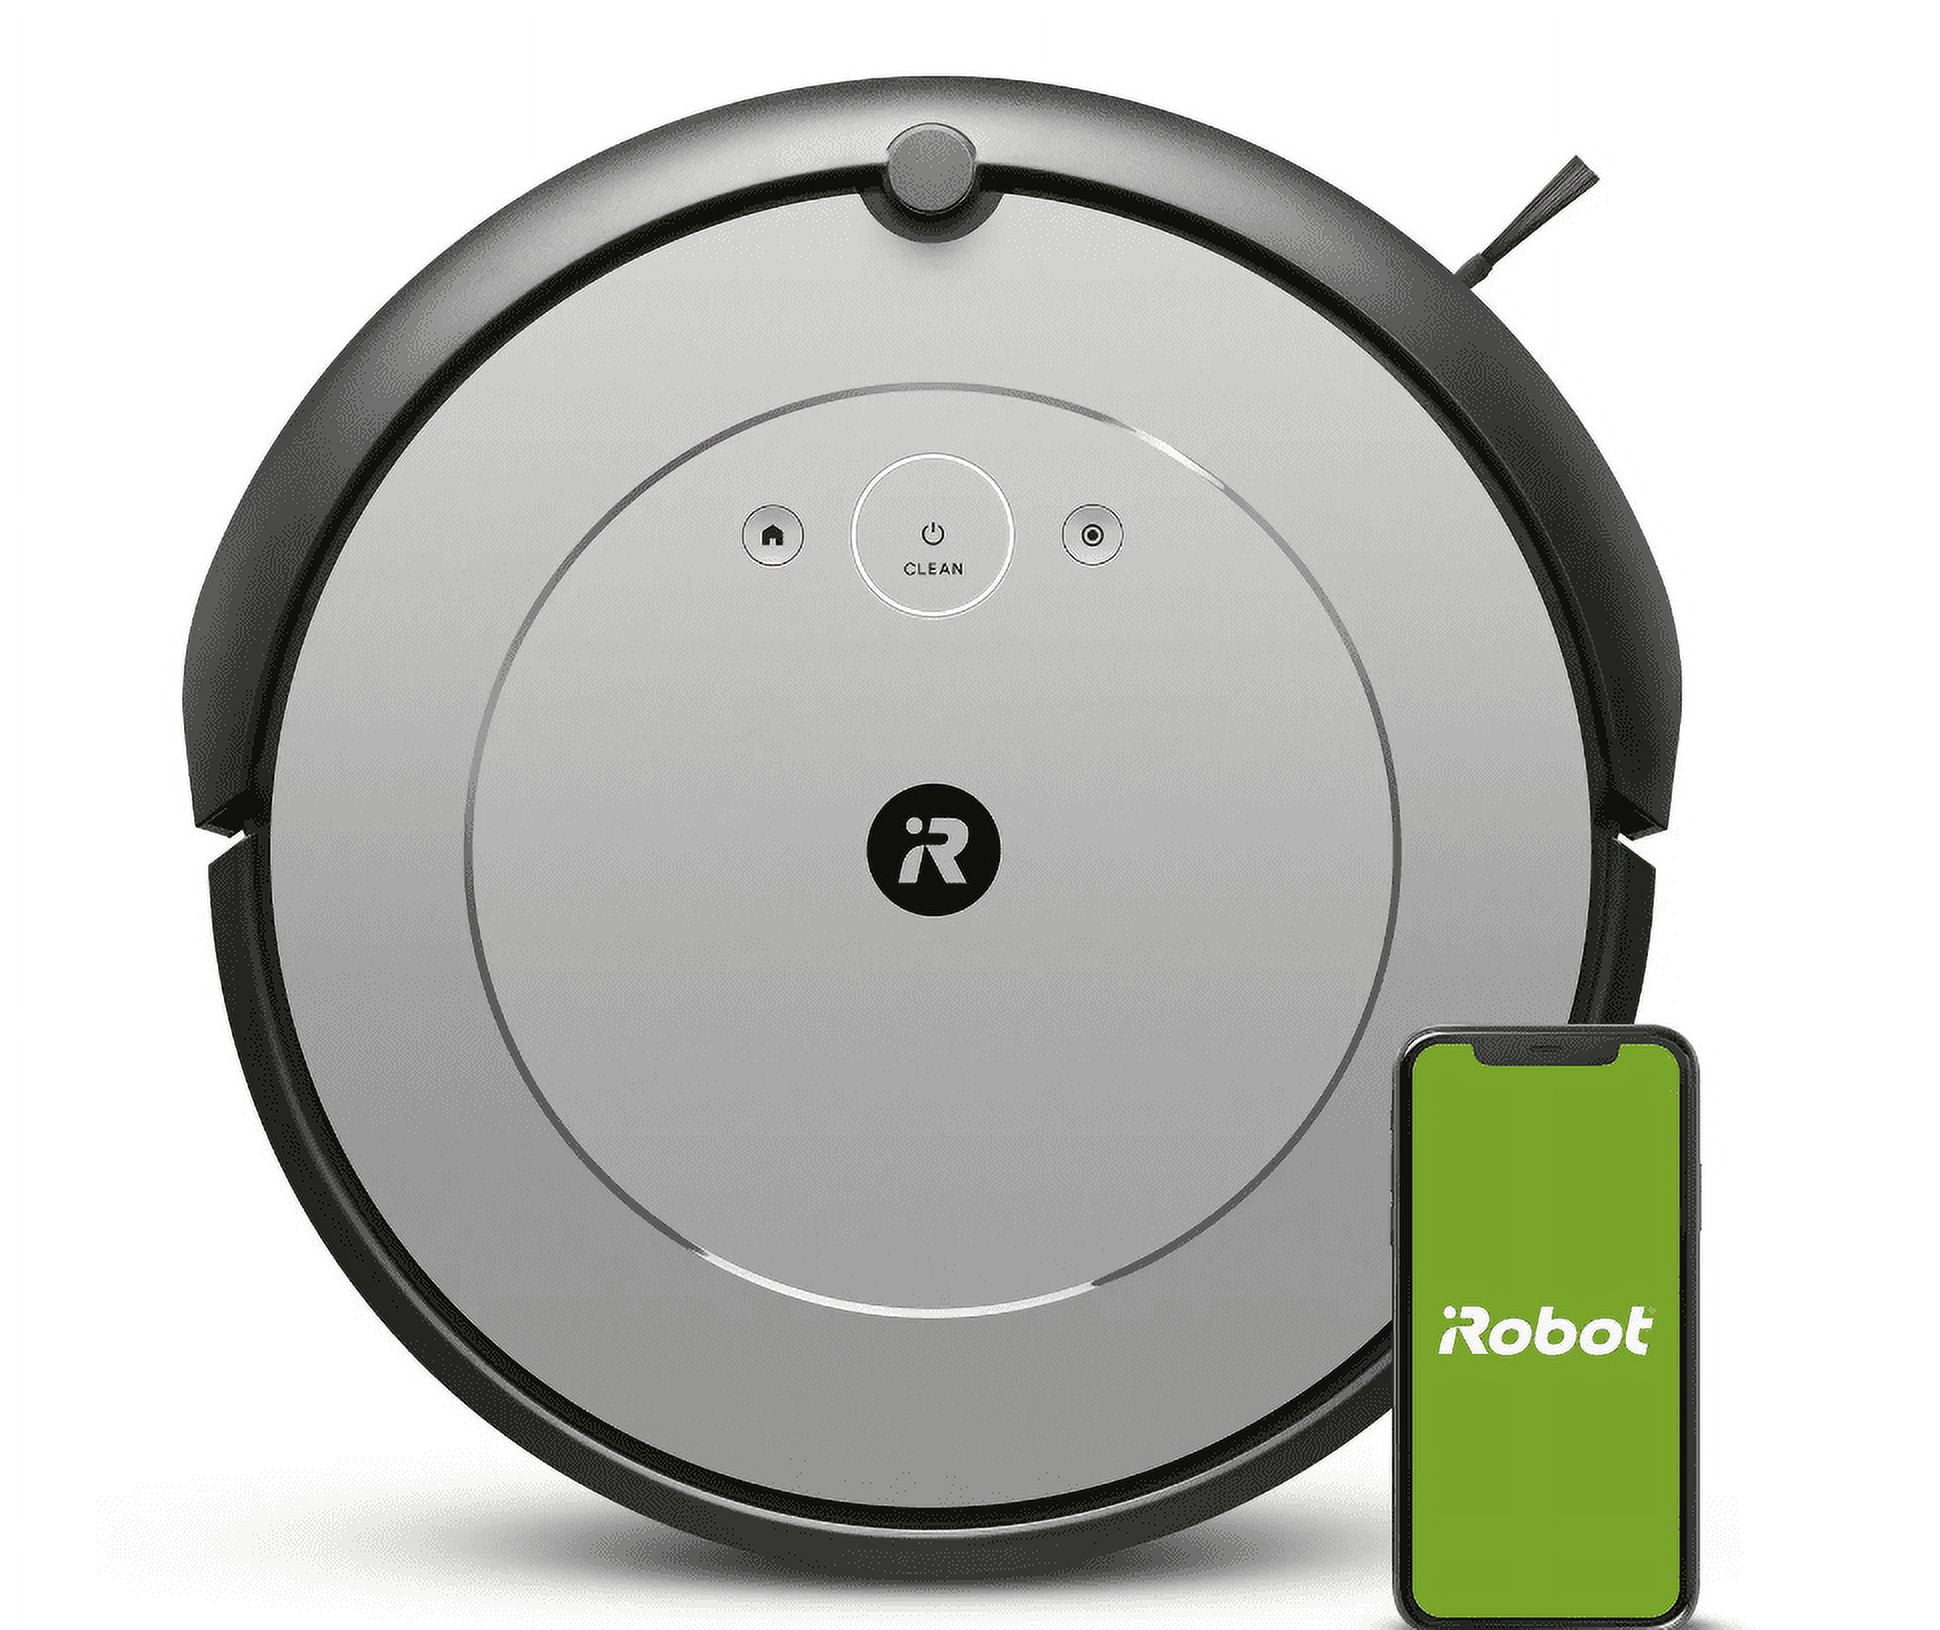 iRobot Roomba i1152 Robot Vacuum - Black NEW! 885155029133